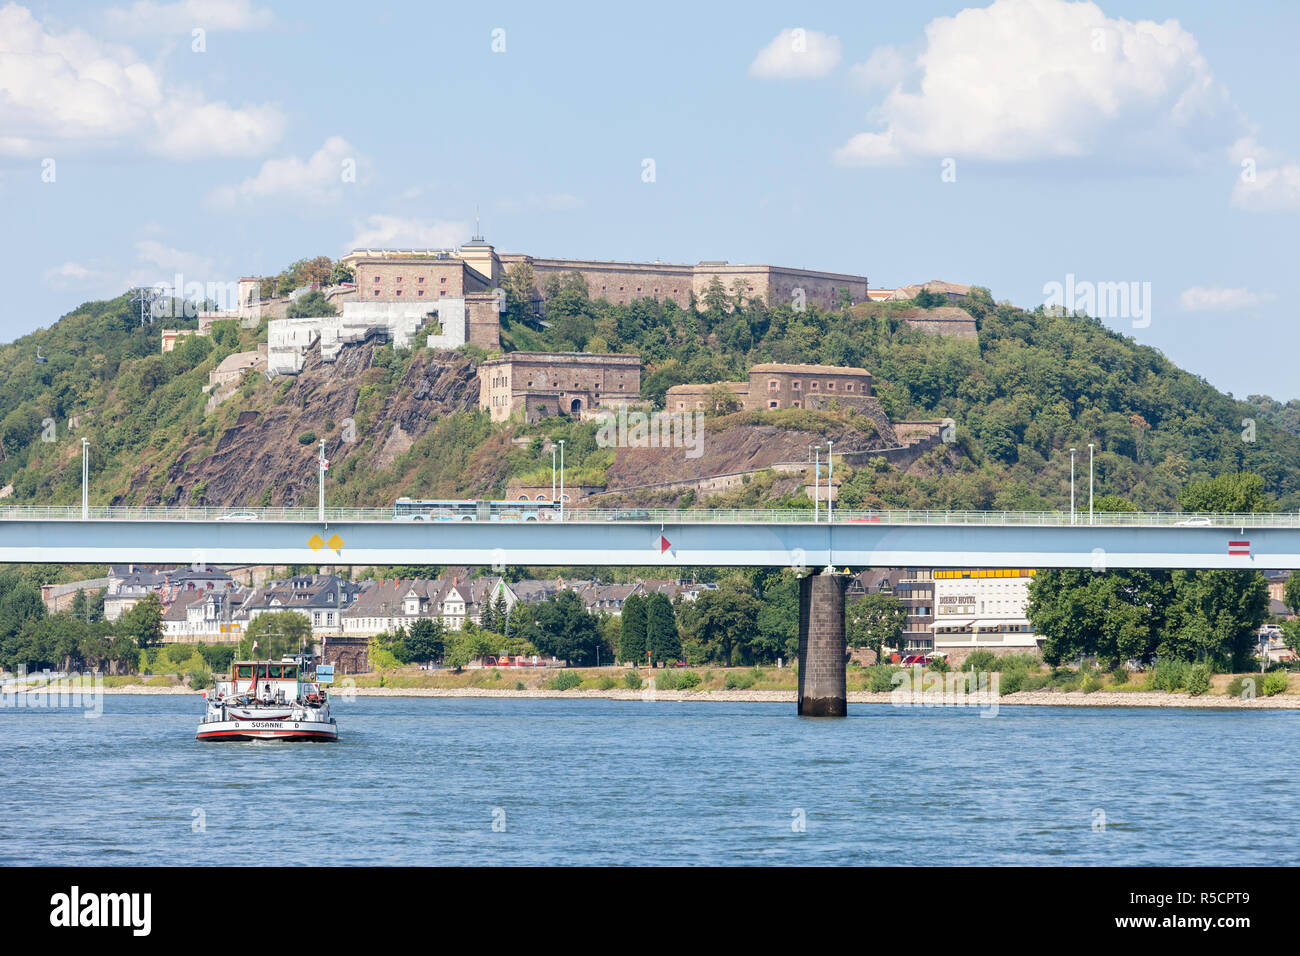 Ehrenbreitstein Castle, Koblenz, Rhine River, Germany.  Bridge carries highway B49 across the Rhine. Stock Photo